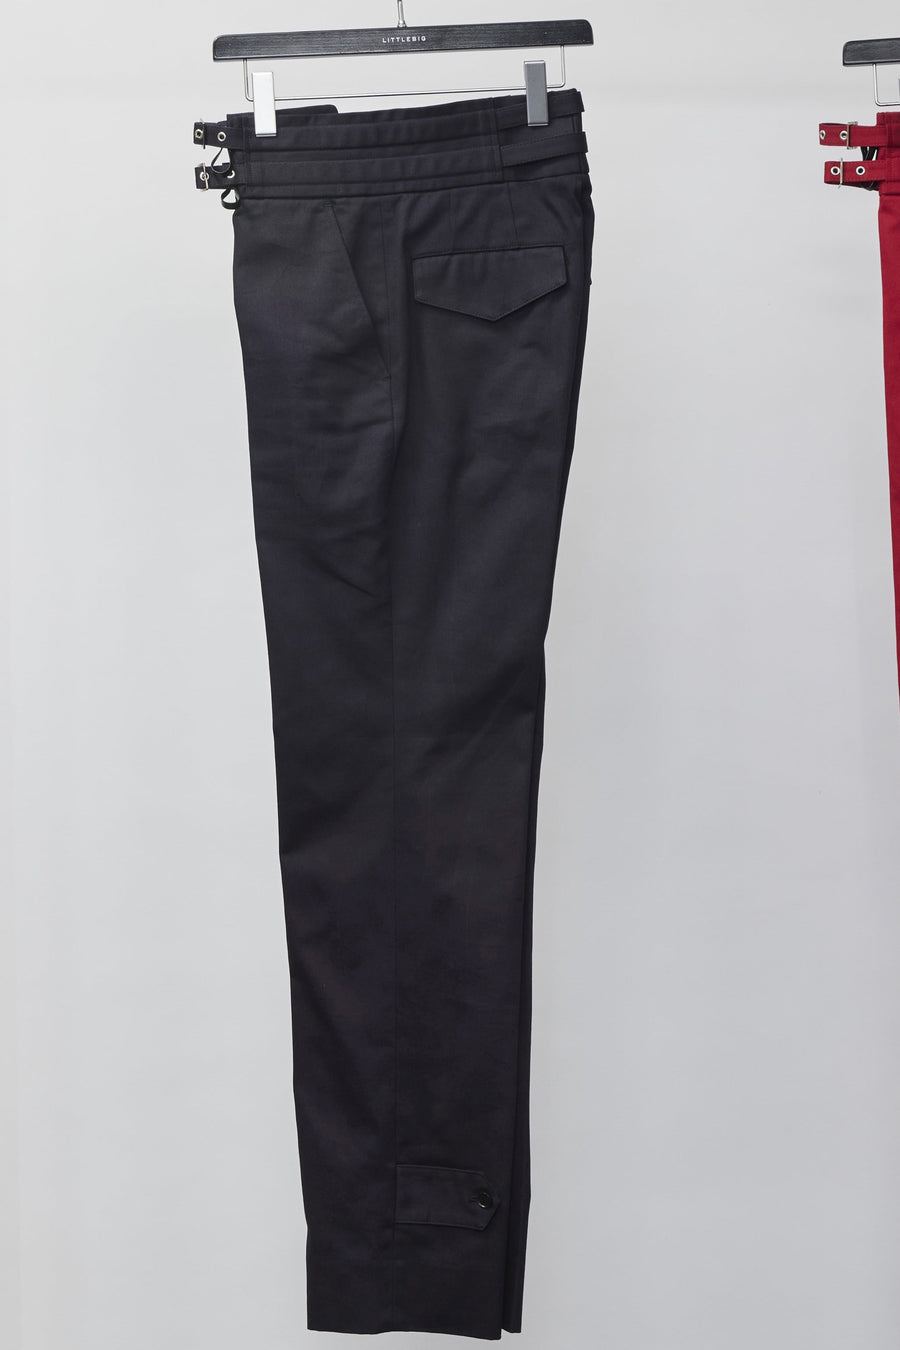 LITTLEBIG  Cotton Gurkha Trousers（Black）